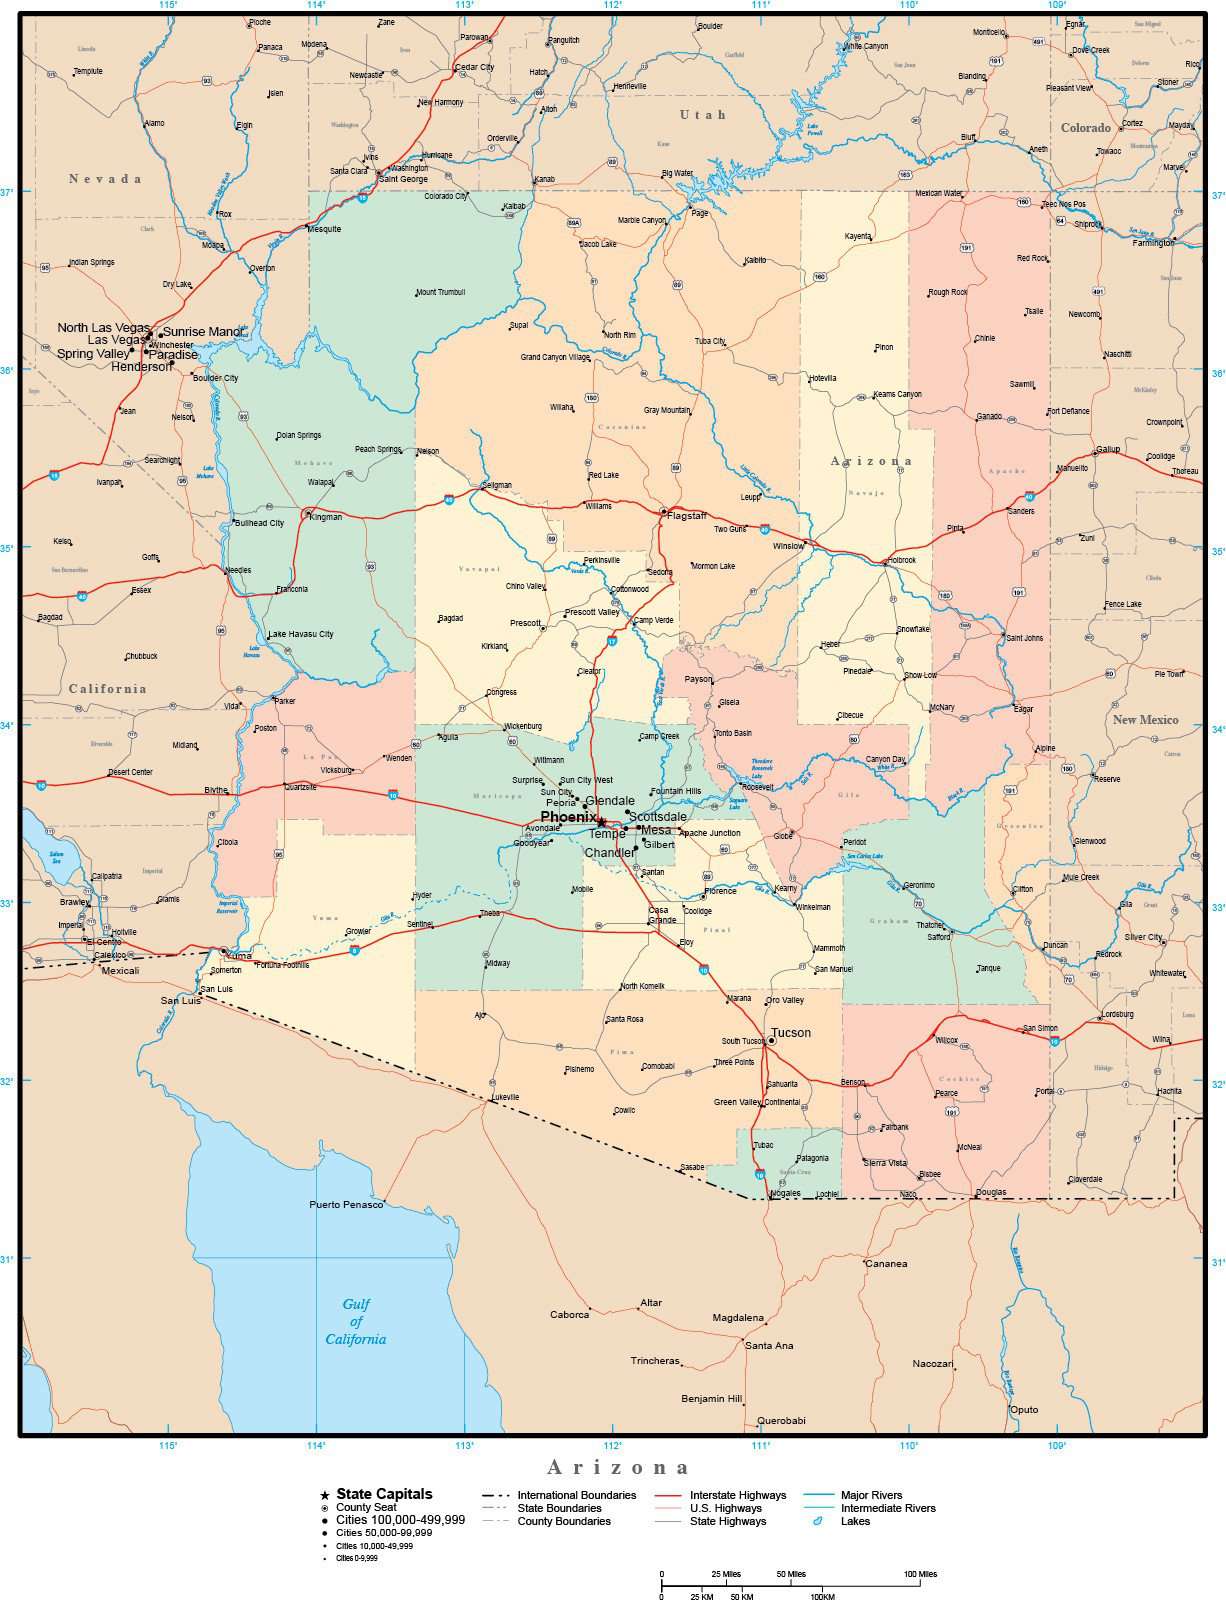 Arizona Adobe Illustrator Map With Counties Cities County Seats Major Roads 3733